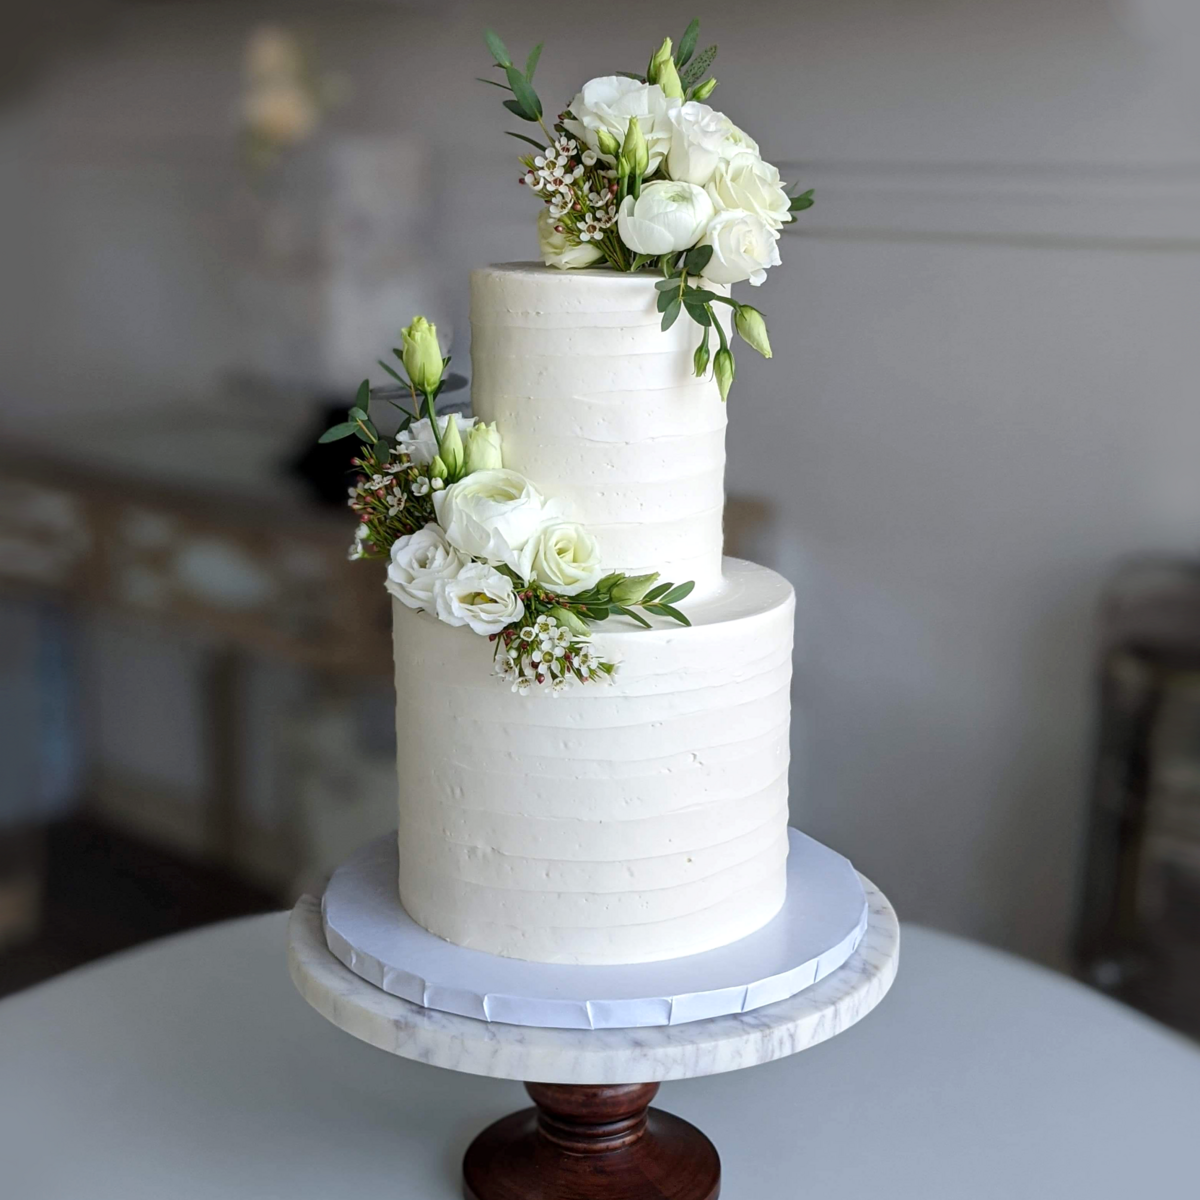 Whippt Kitchen - wedding cake Oct 2020 buttercream ridges 2